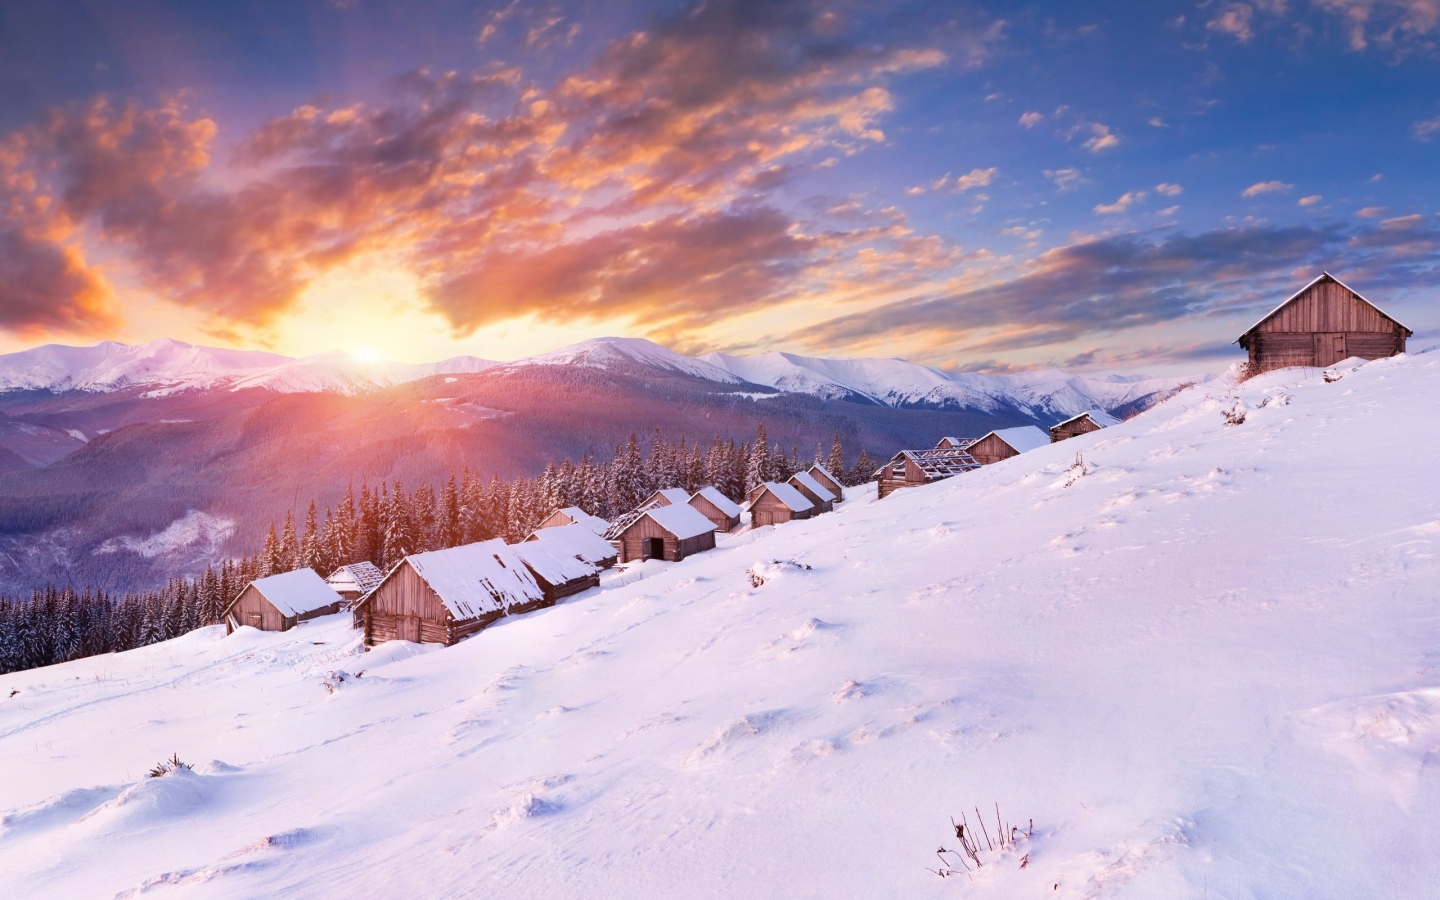 Winter Beautiful Sunset for 1440 x 900 widescreen resolution